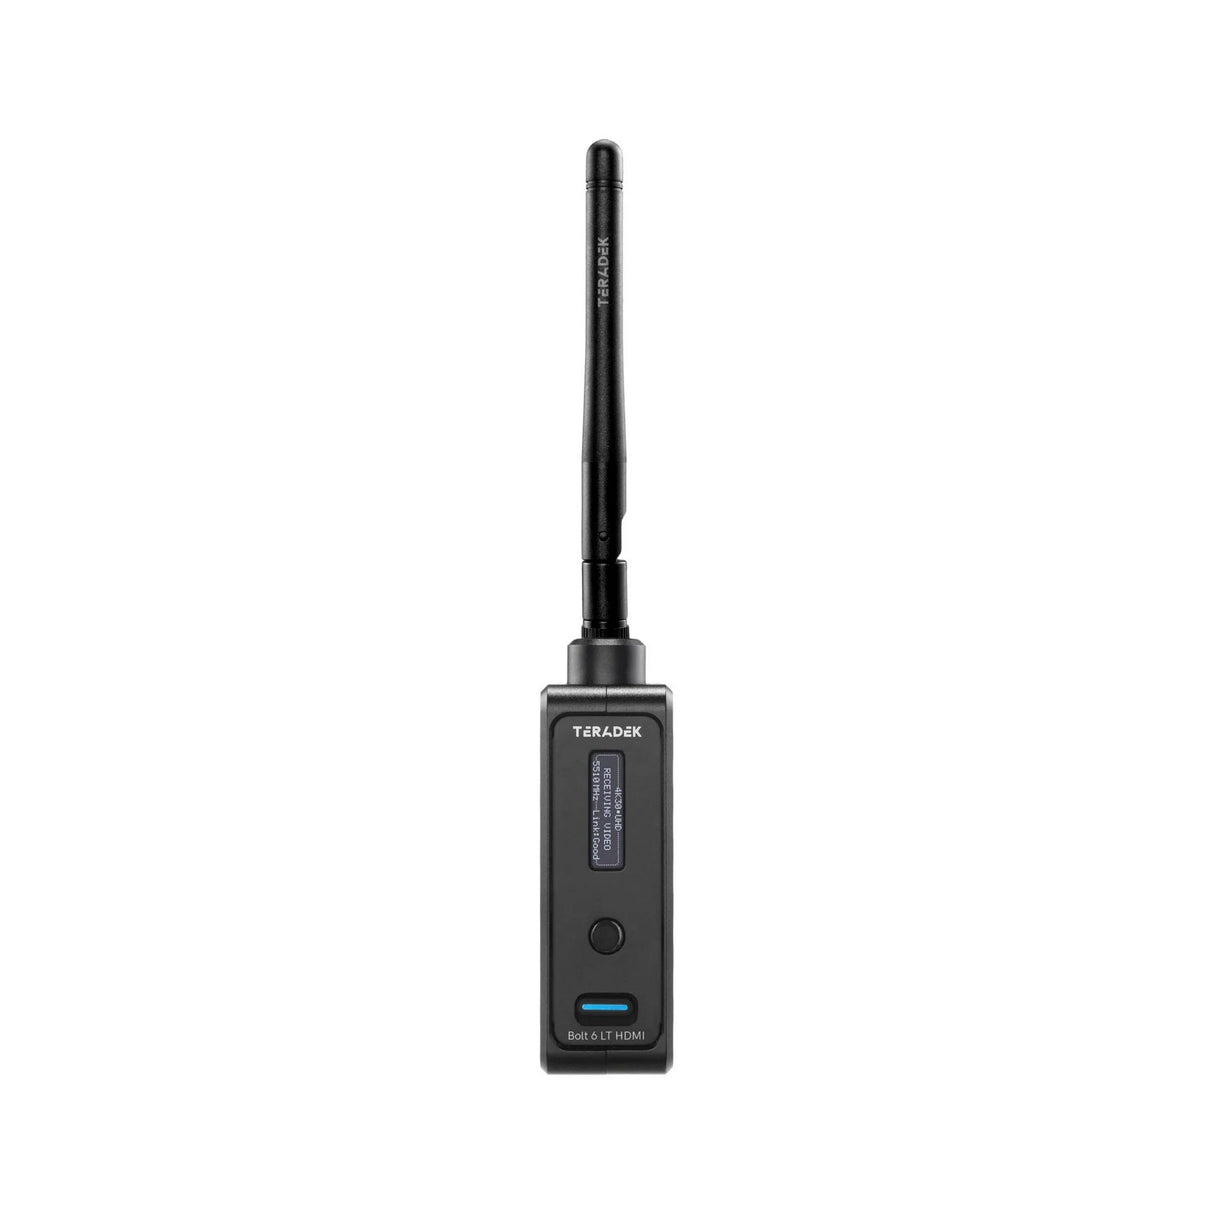 Teradek 10-2267 Bolt 6 LT HDMI 750 Wireless Video Receiver